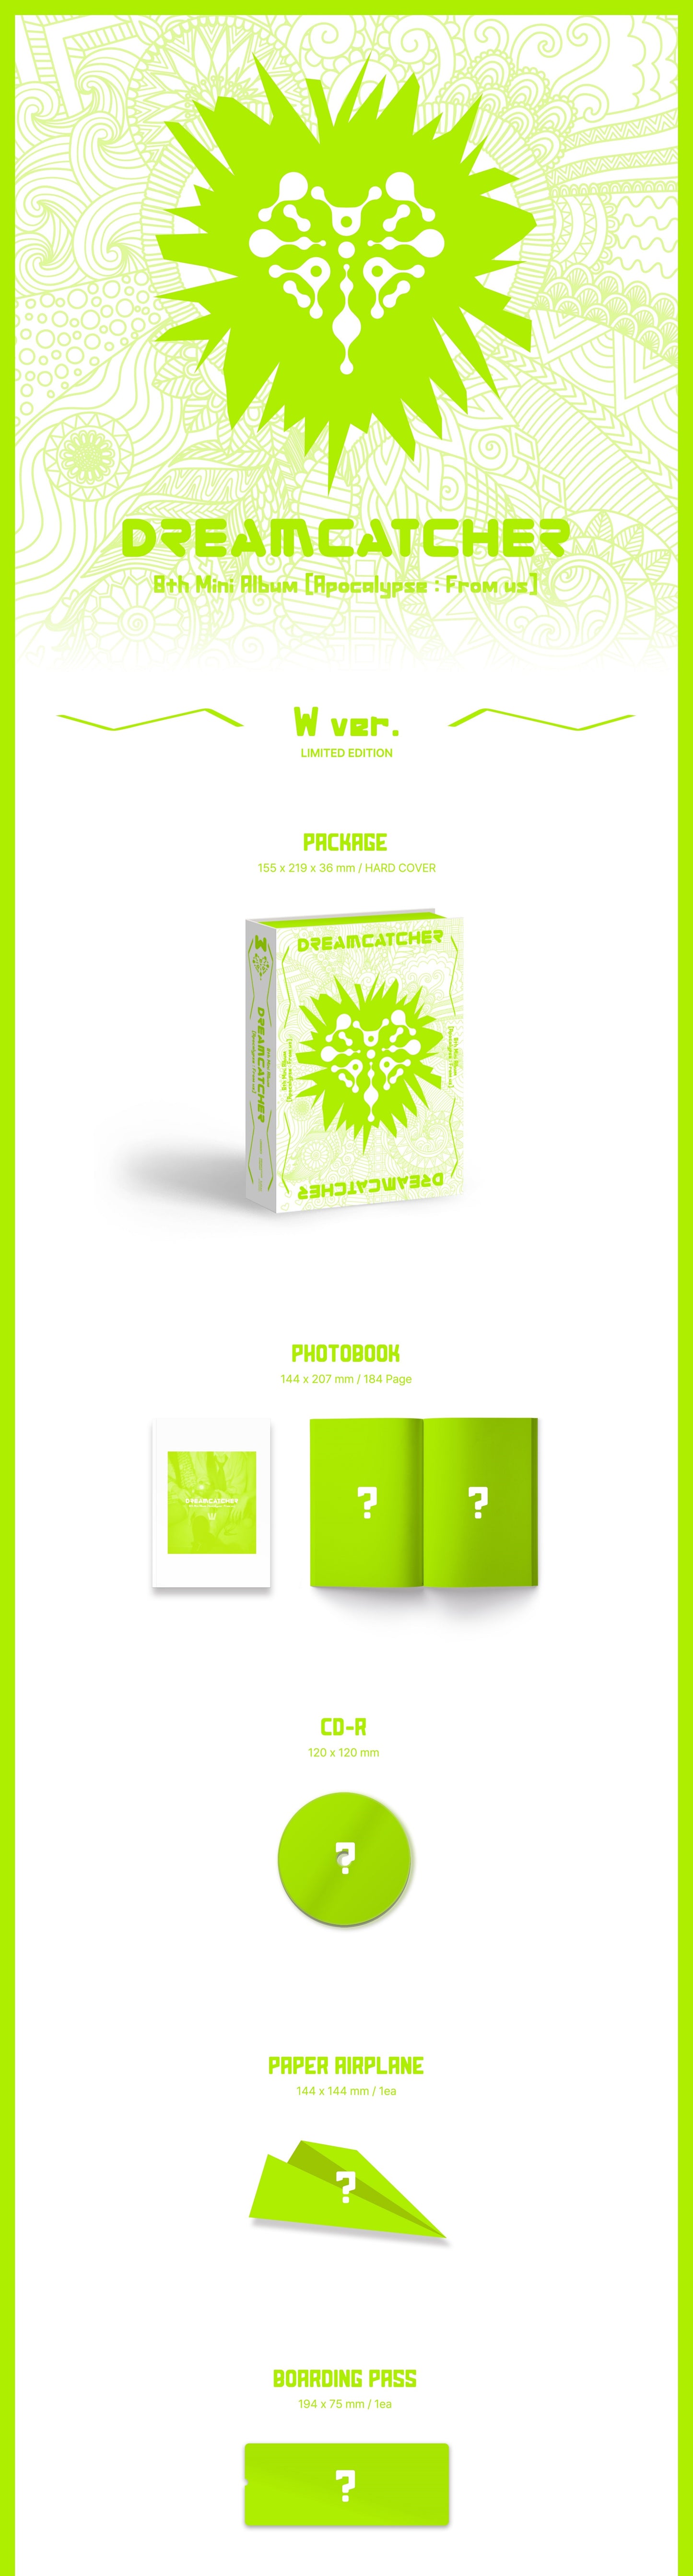 K-Pop CD Dreamcatcher - 8th Mini Album 'Apocalypse : From us' [W Ver.][Limited Edtion]